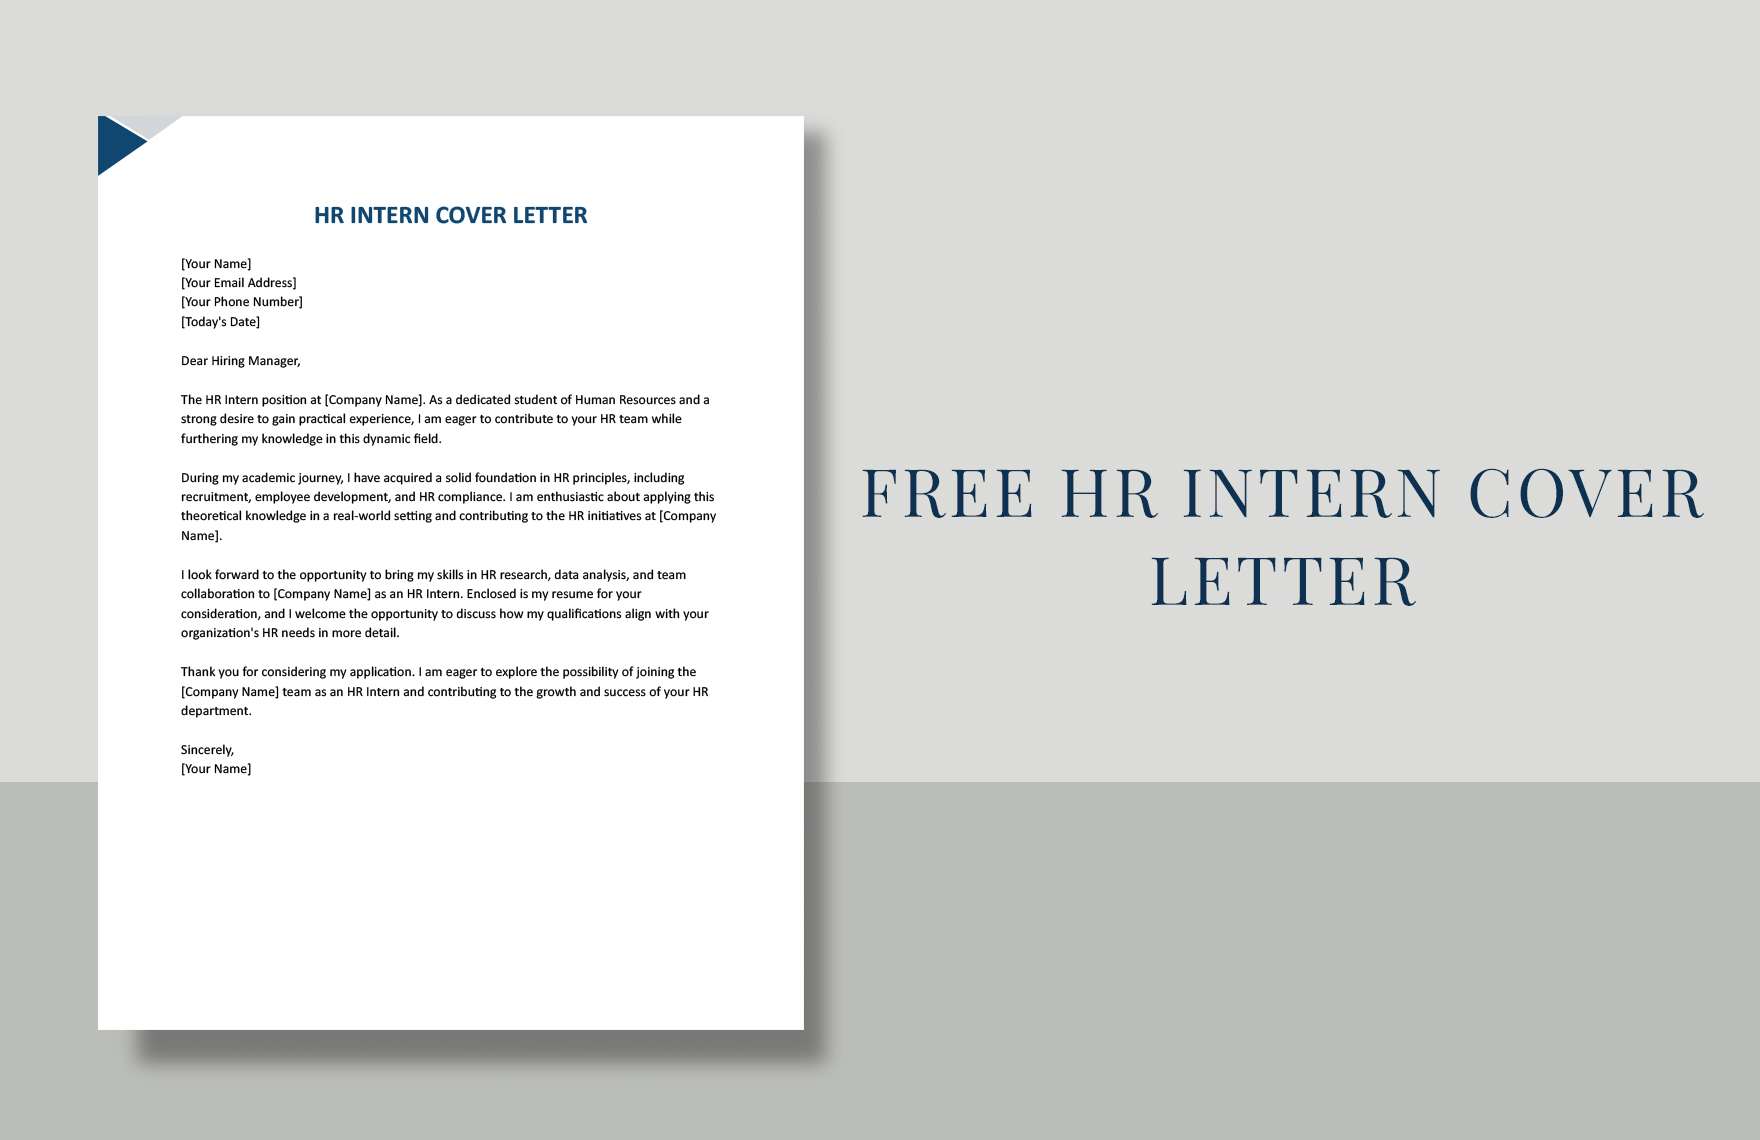 HR Intern Cover Letter